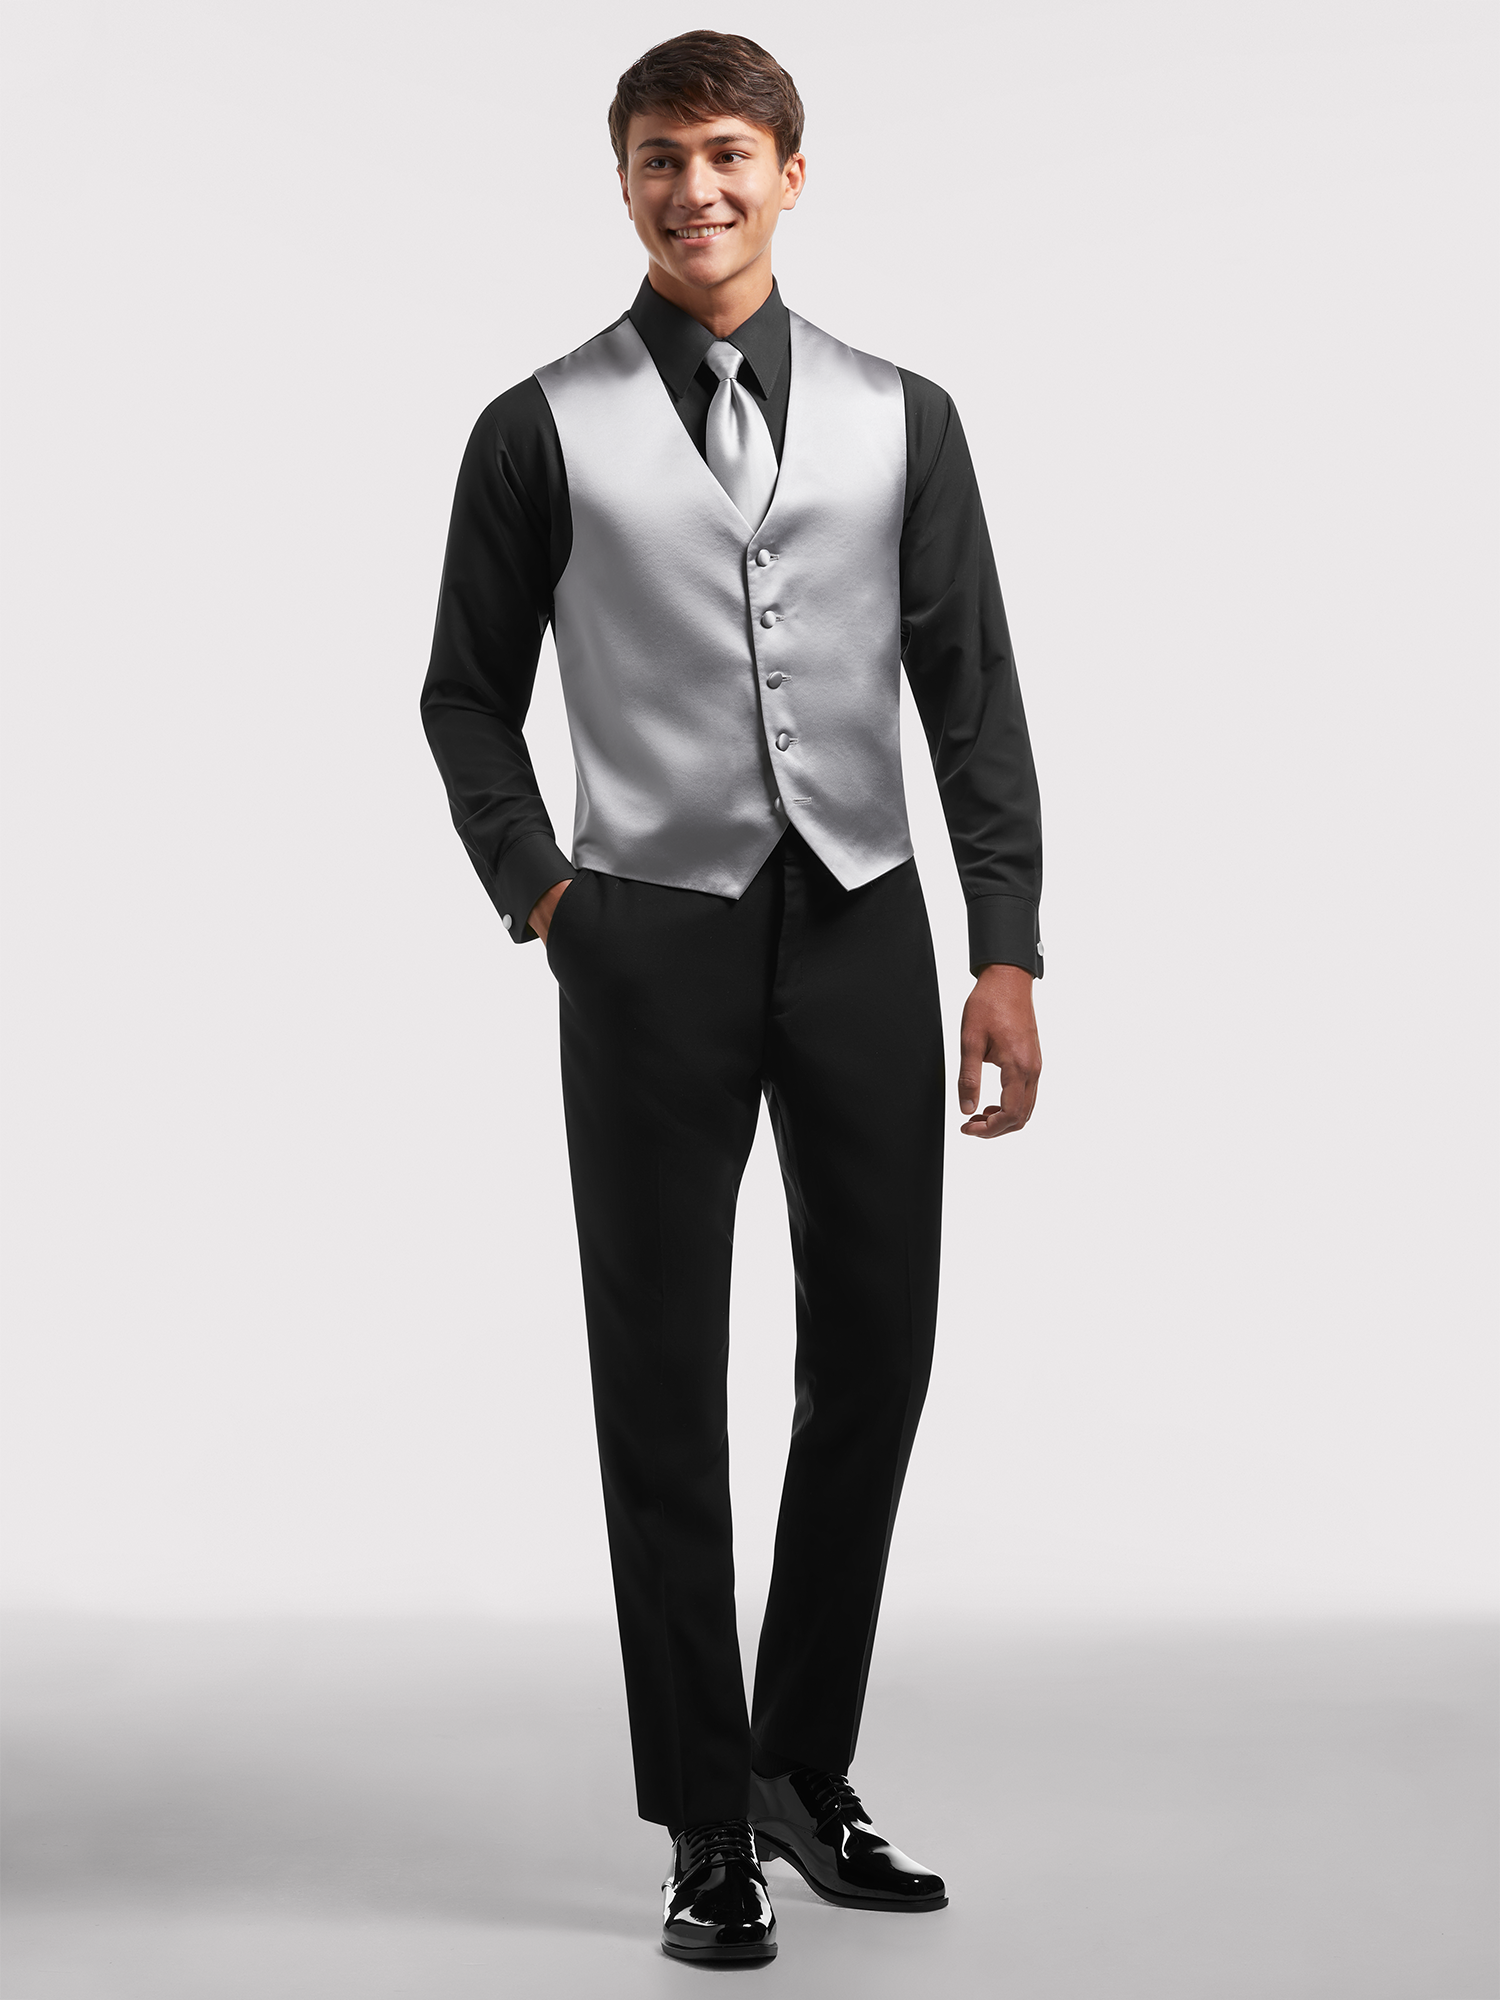 Classic Black Tux by Calvin Klein | Tuxedo Rental